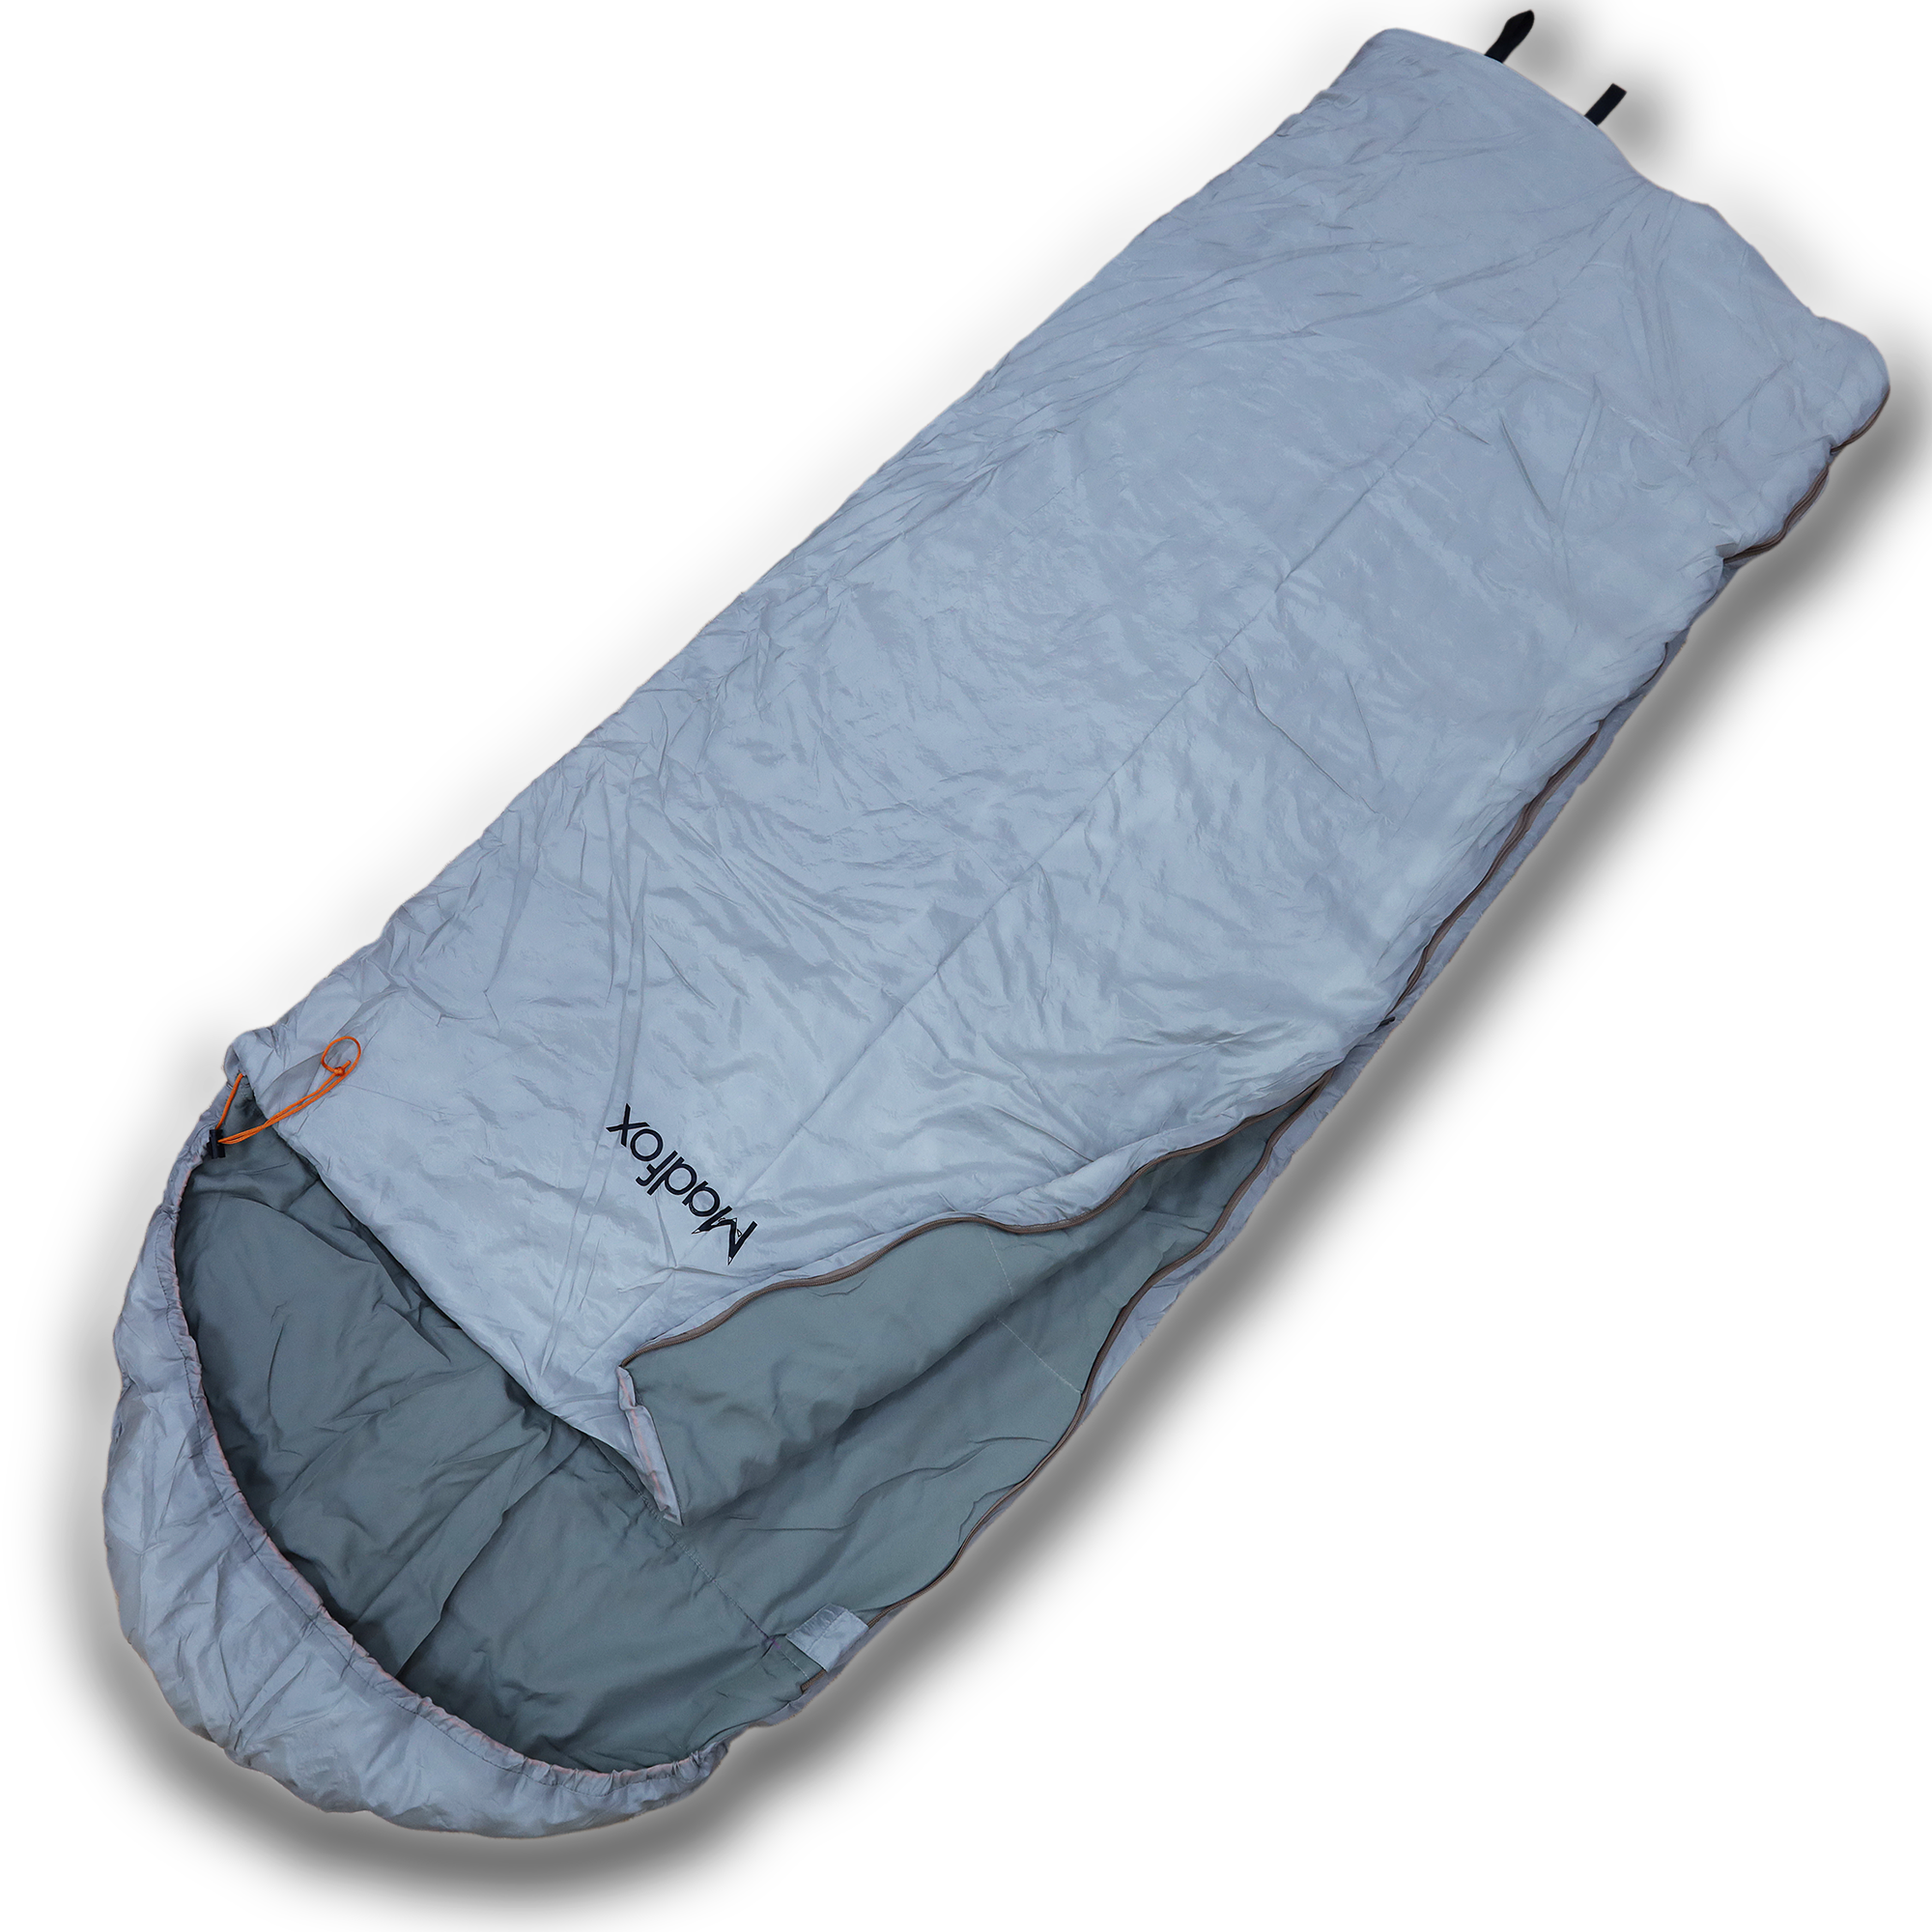  C060 hooded rectangular sleeping bag 